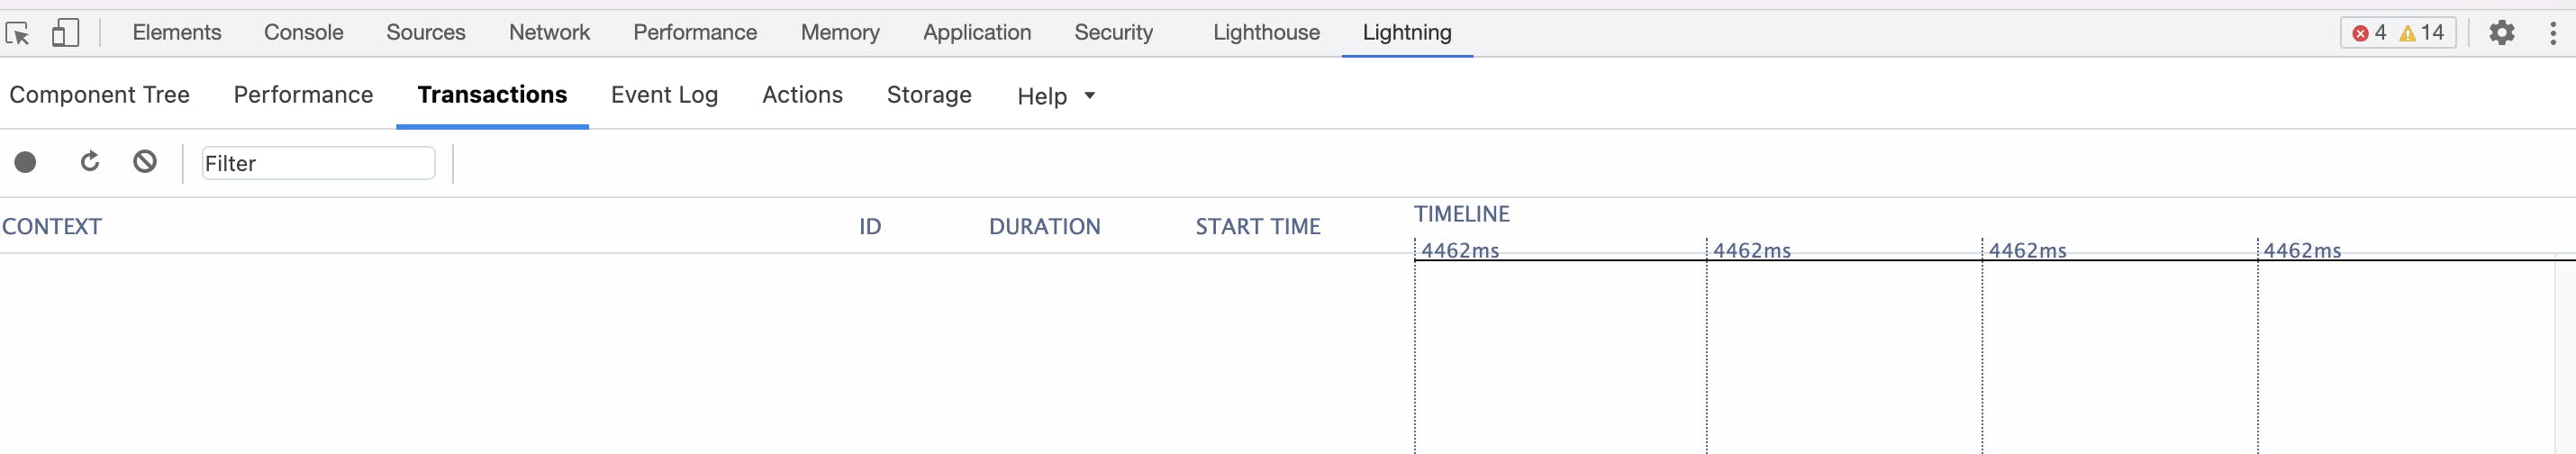 Salesforce lightning inspector example